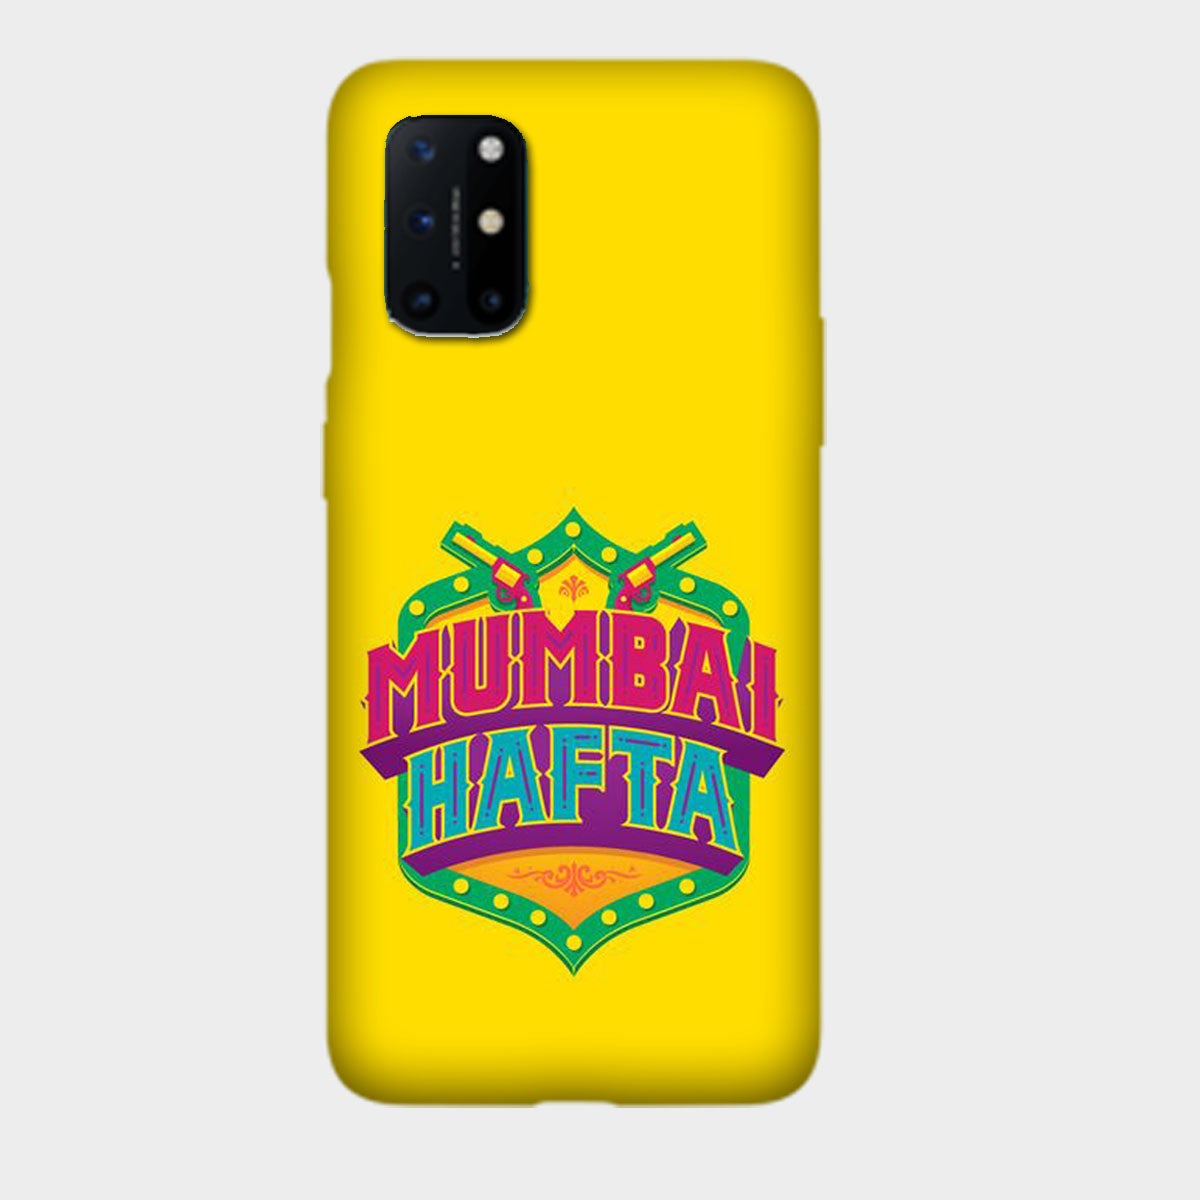 Mumbai Hafta - Mobile Phone Cover - Hard Case - OnePlus